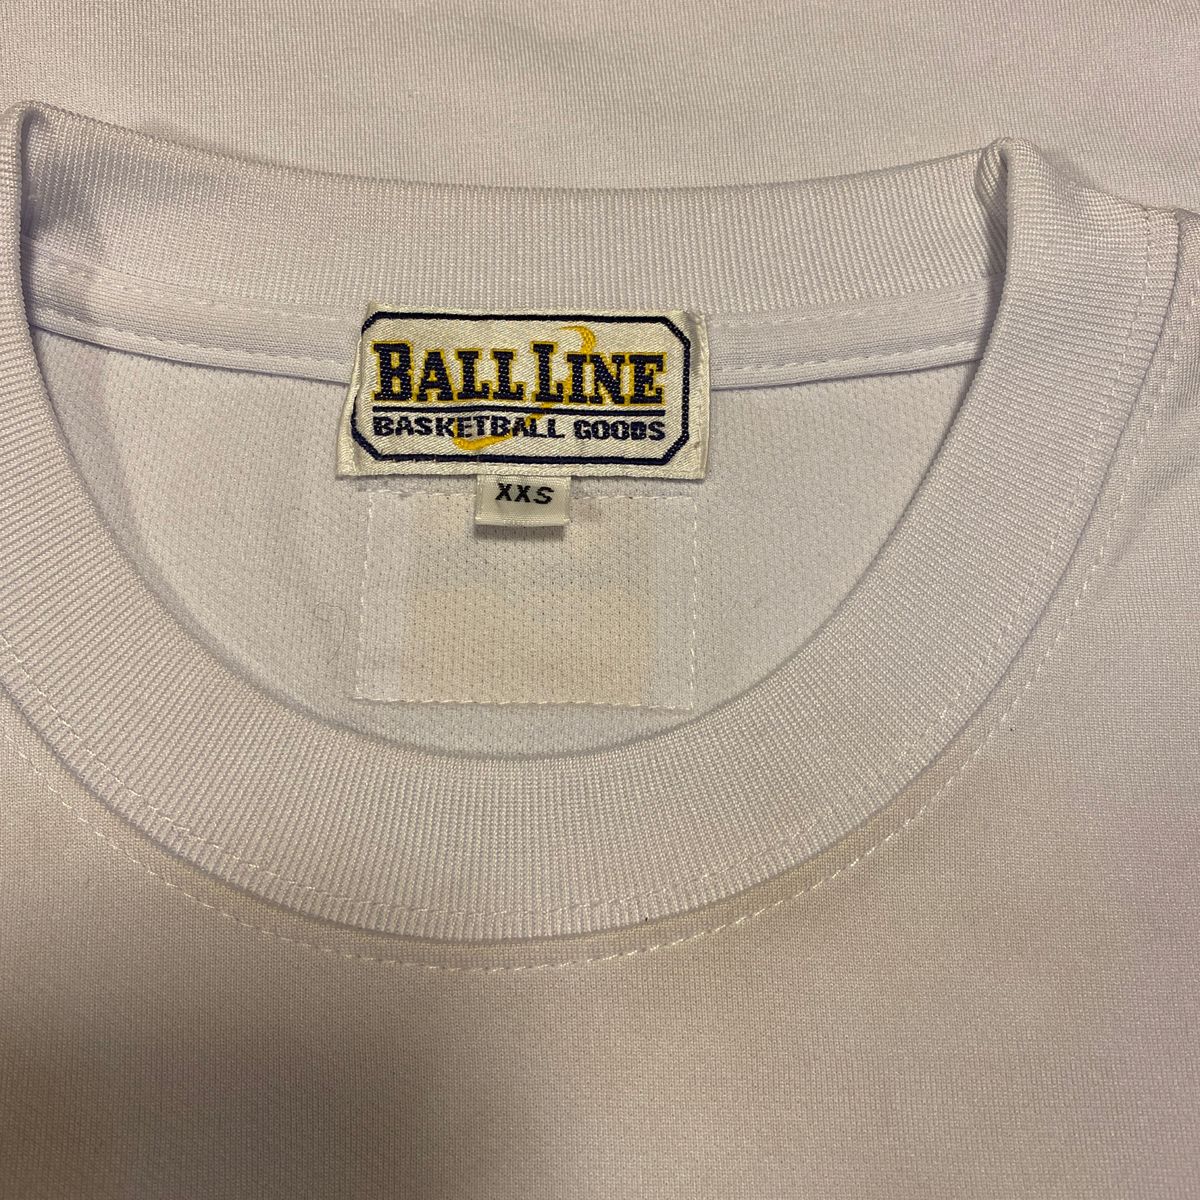 BALL LINE/オンザコート/ボーラーズ 半袖TシャツXXS白130140150位ミニバスバスケ